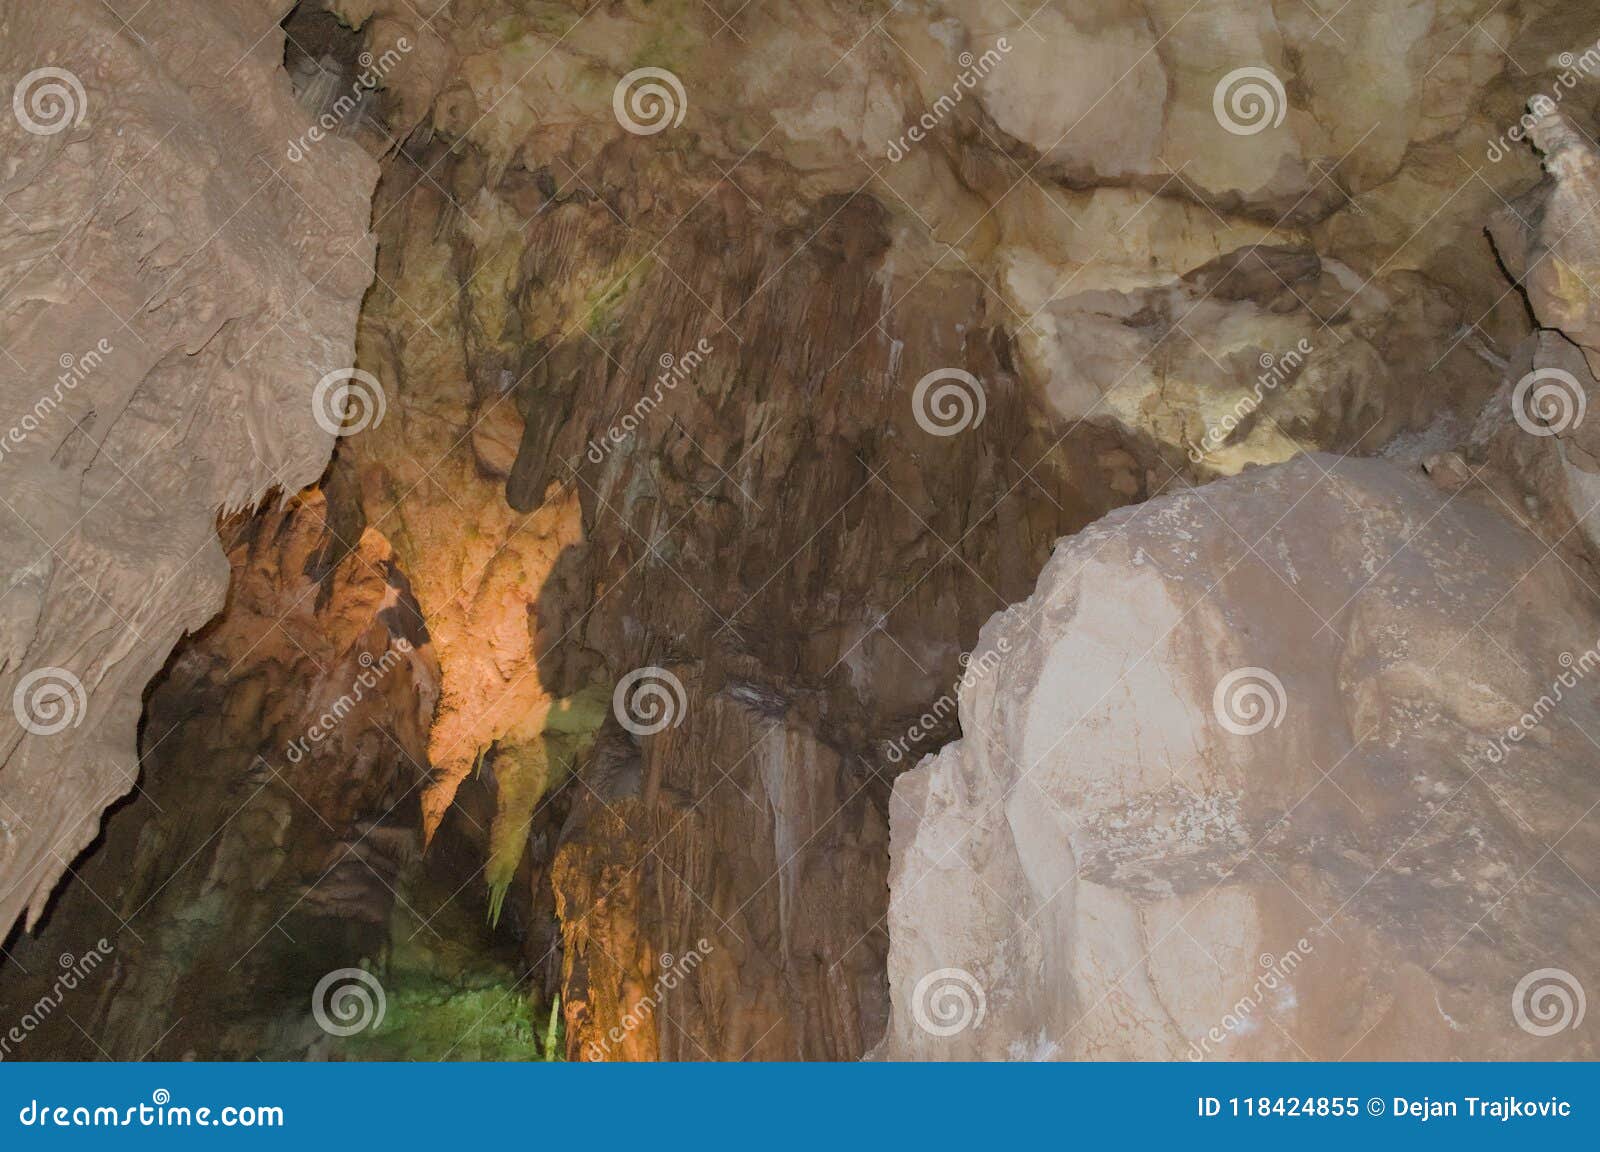 stalagmites and stalactites in resava cave, serbia